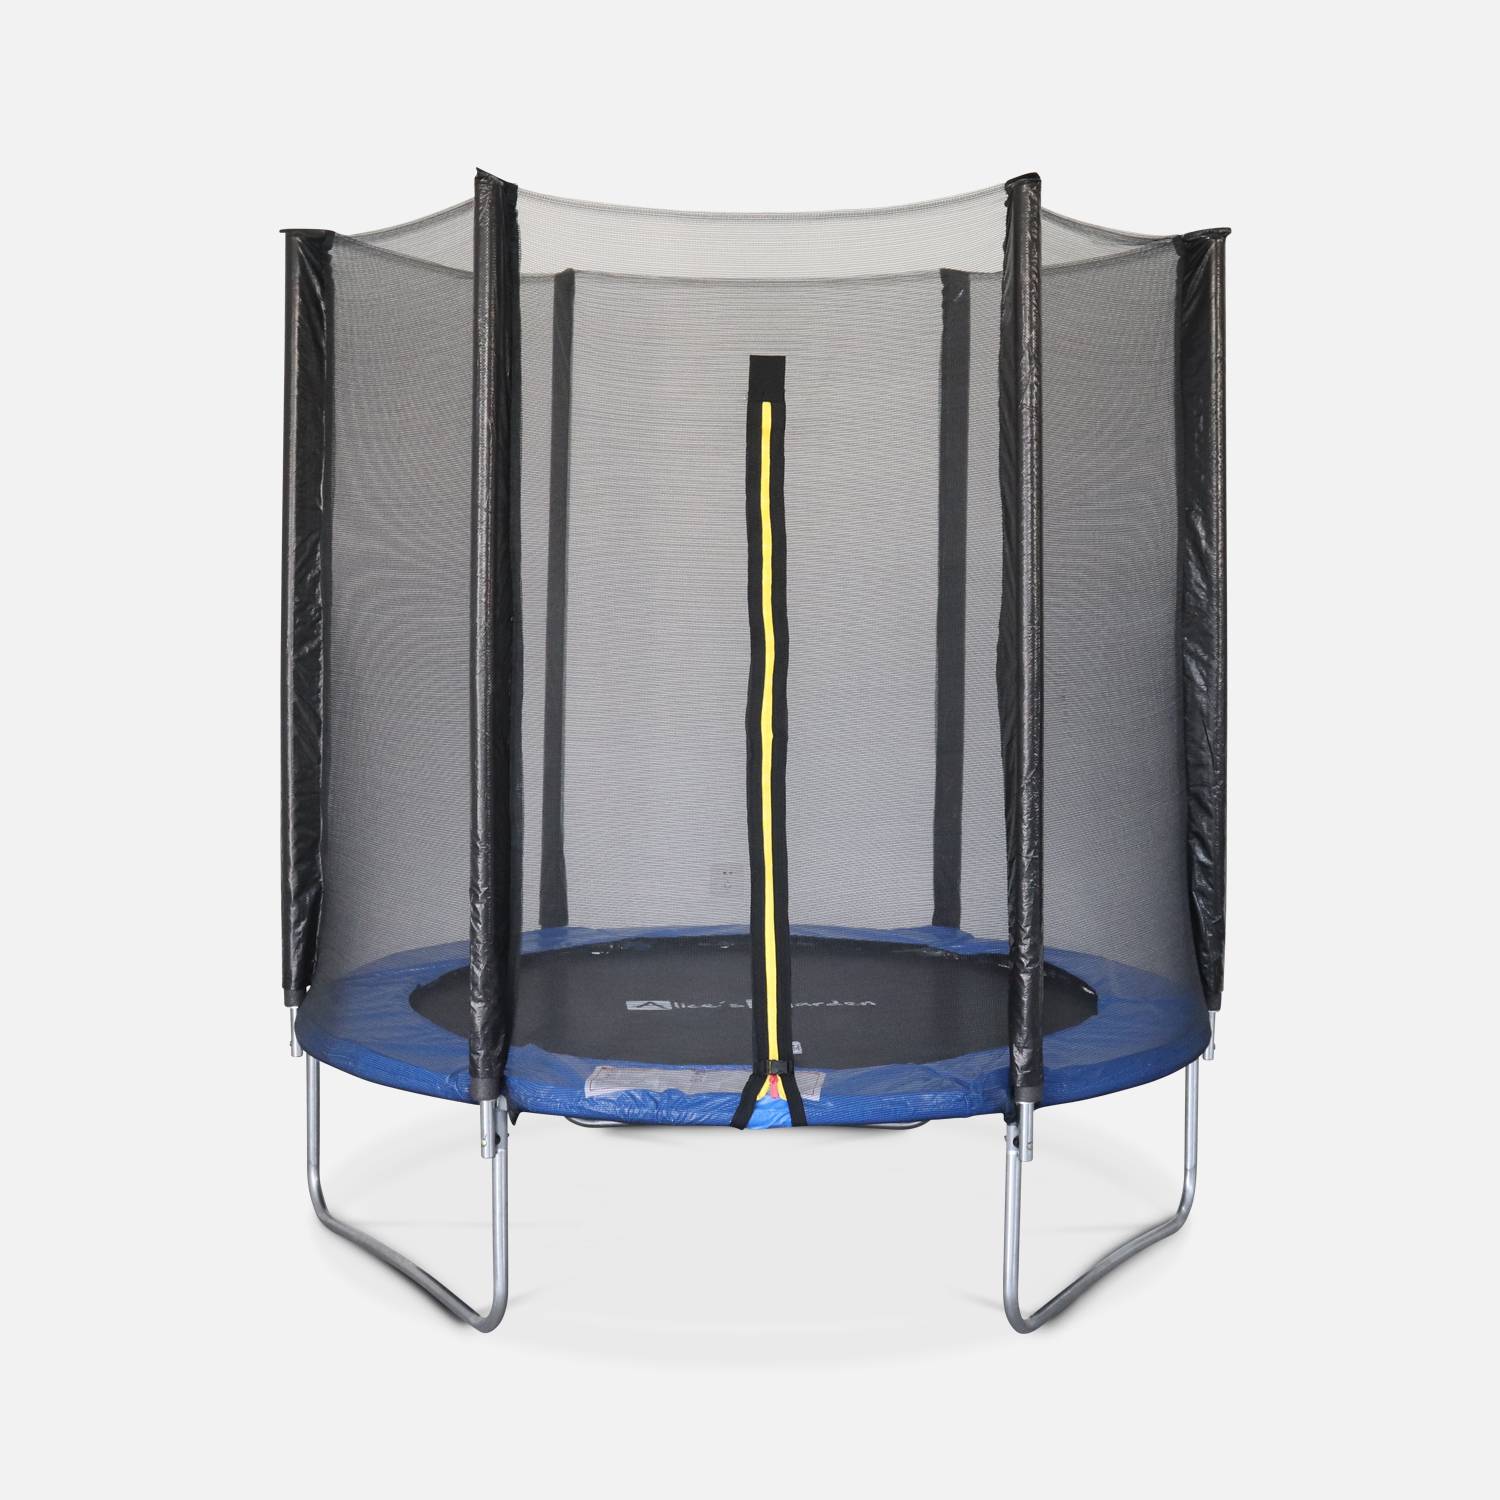 Trampoline Ø180cm - Cassiopée blue with protective net - Garden trampoline 2m | sweeek